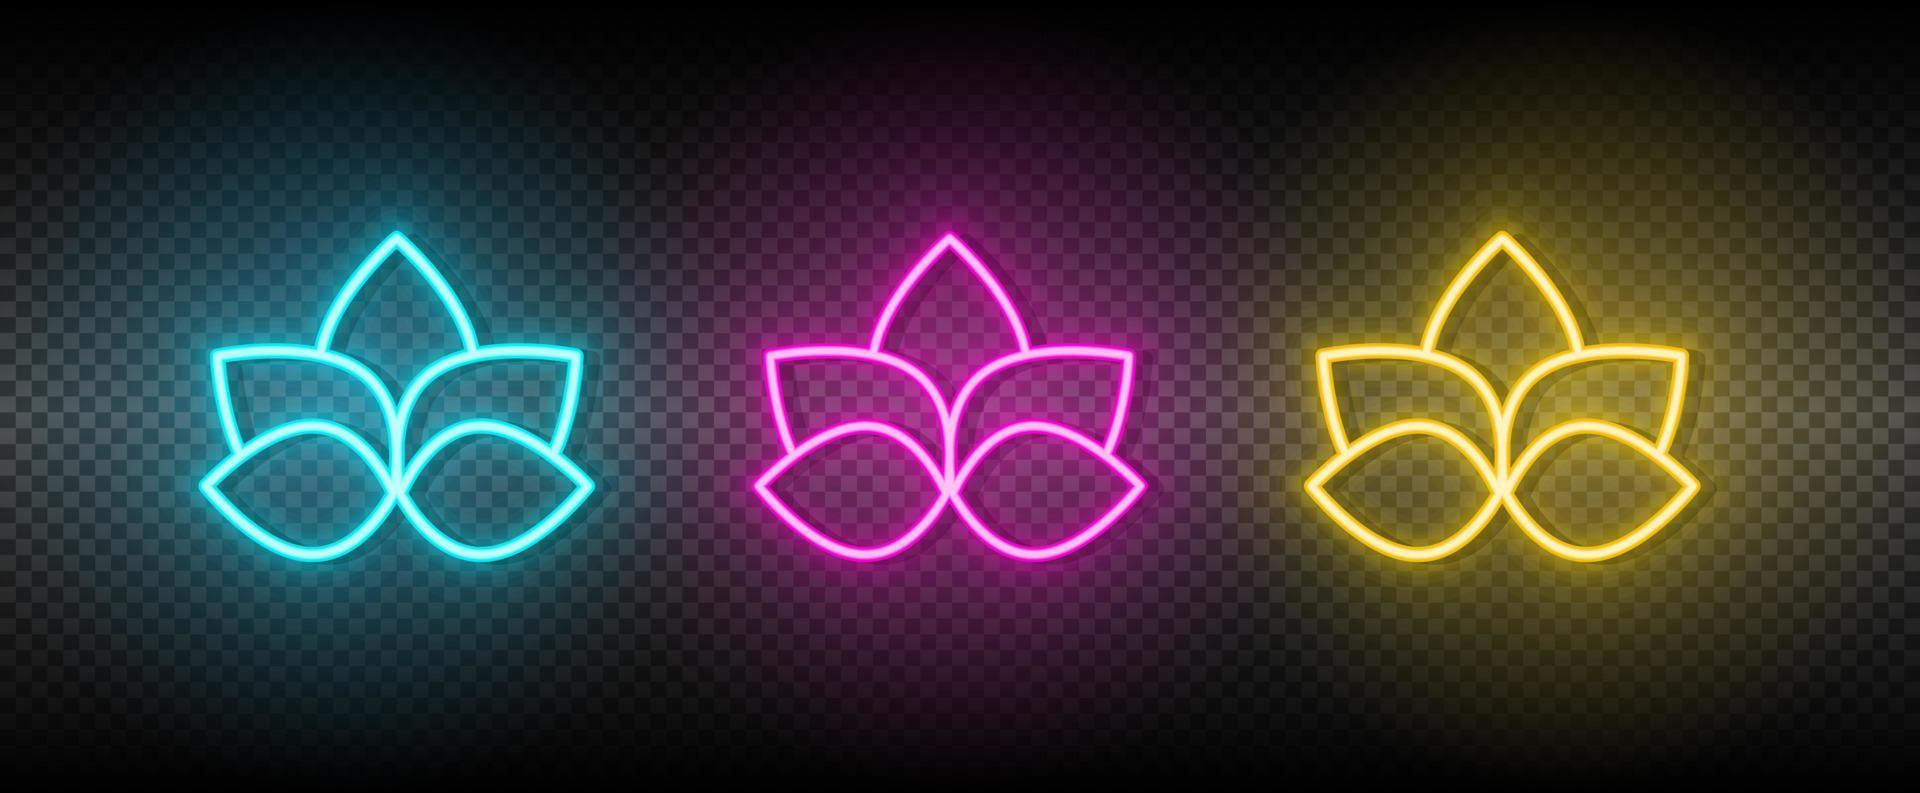 Lotus flower symbol neon vector icon.